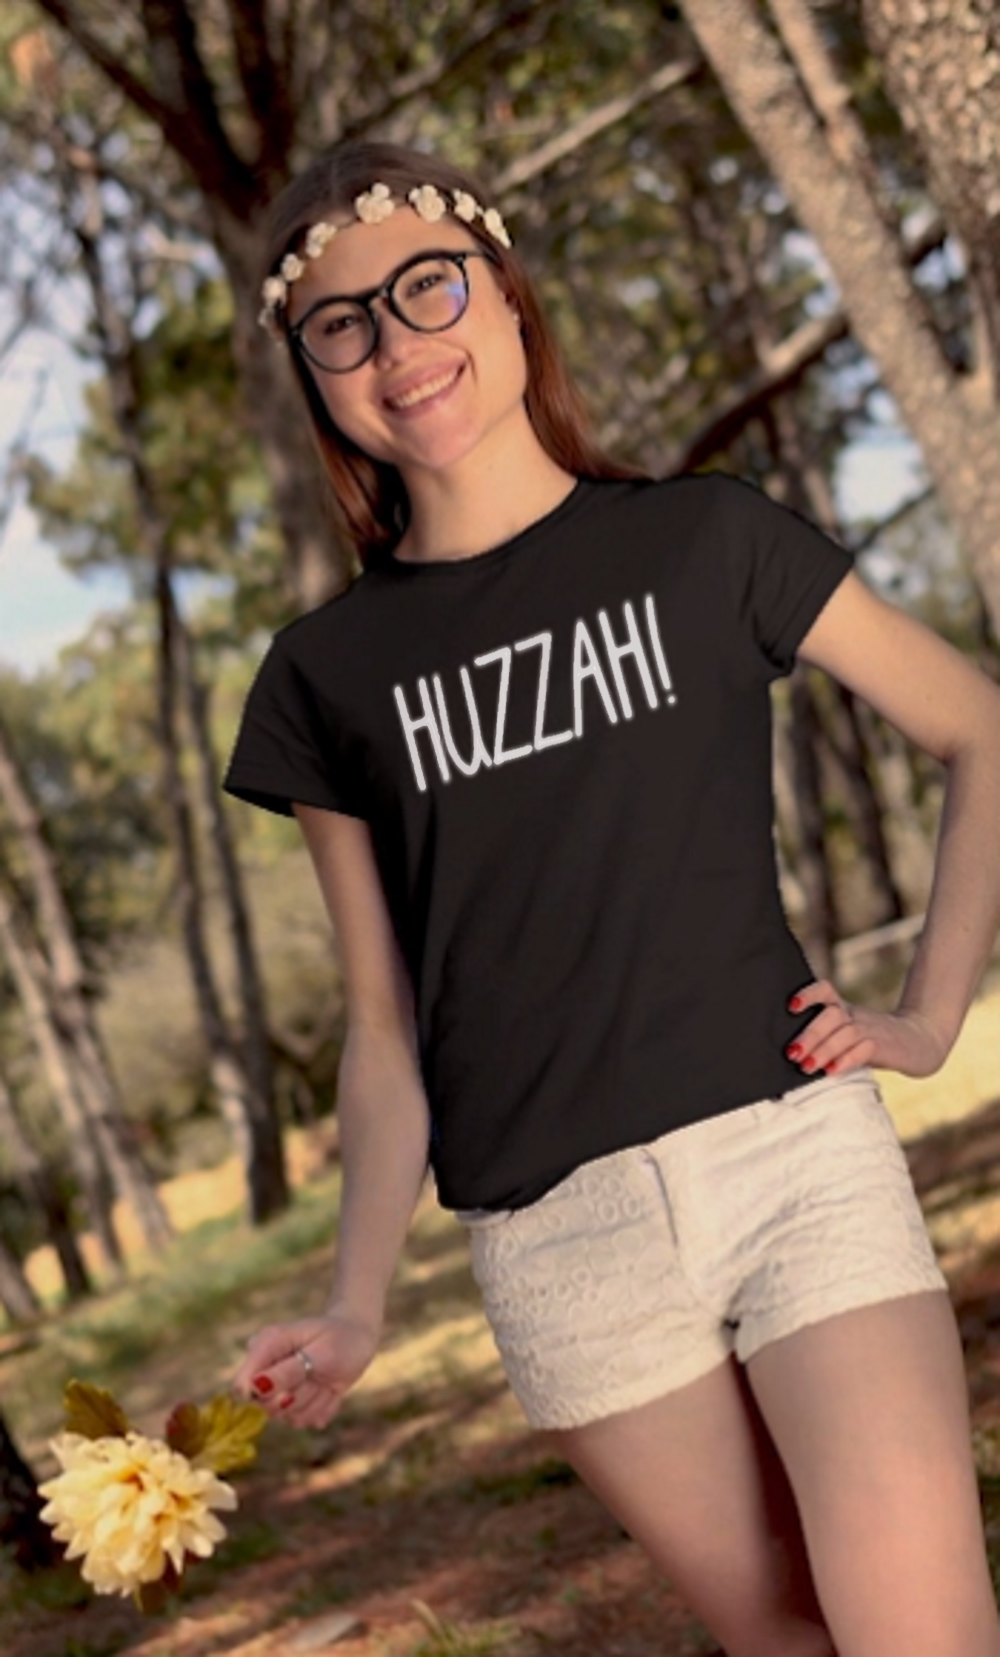 Huzzah T-Shirt